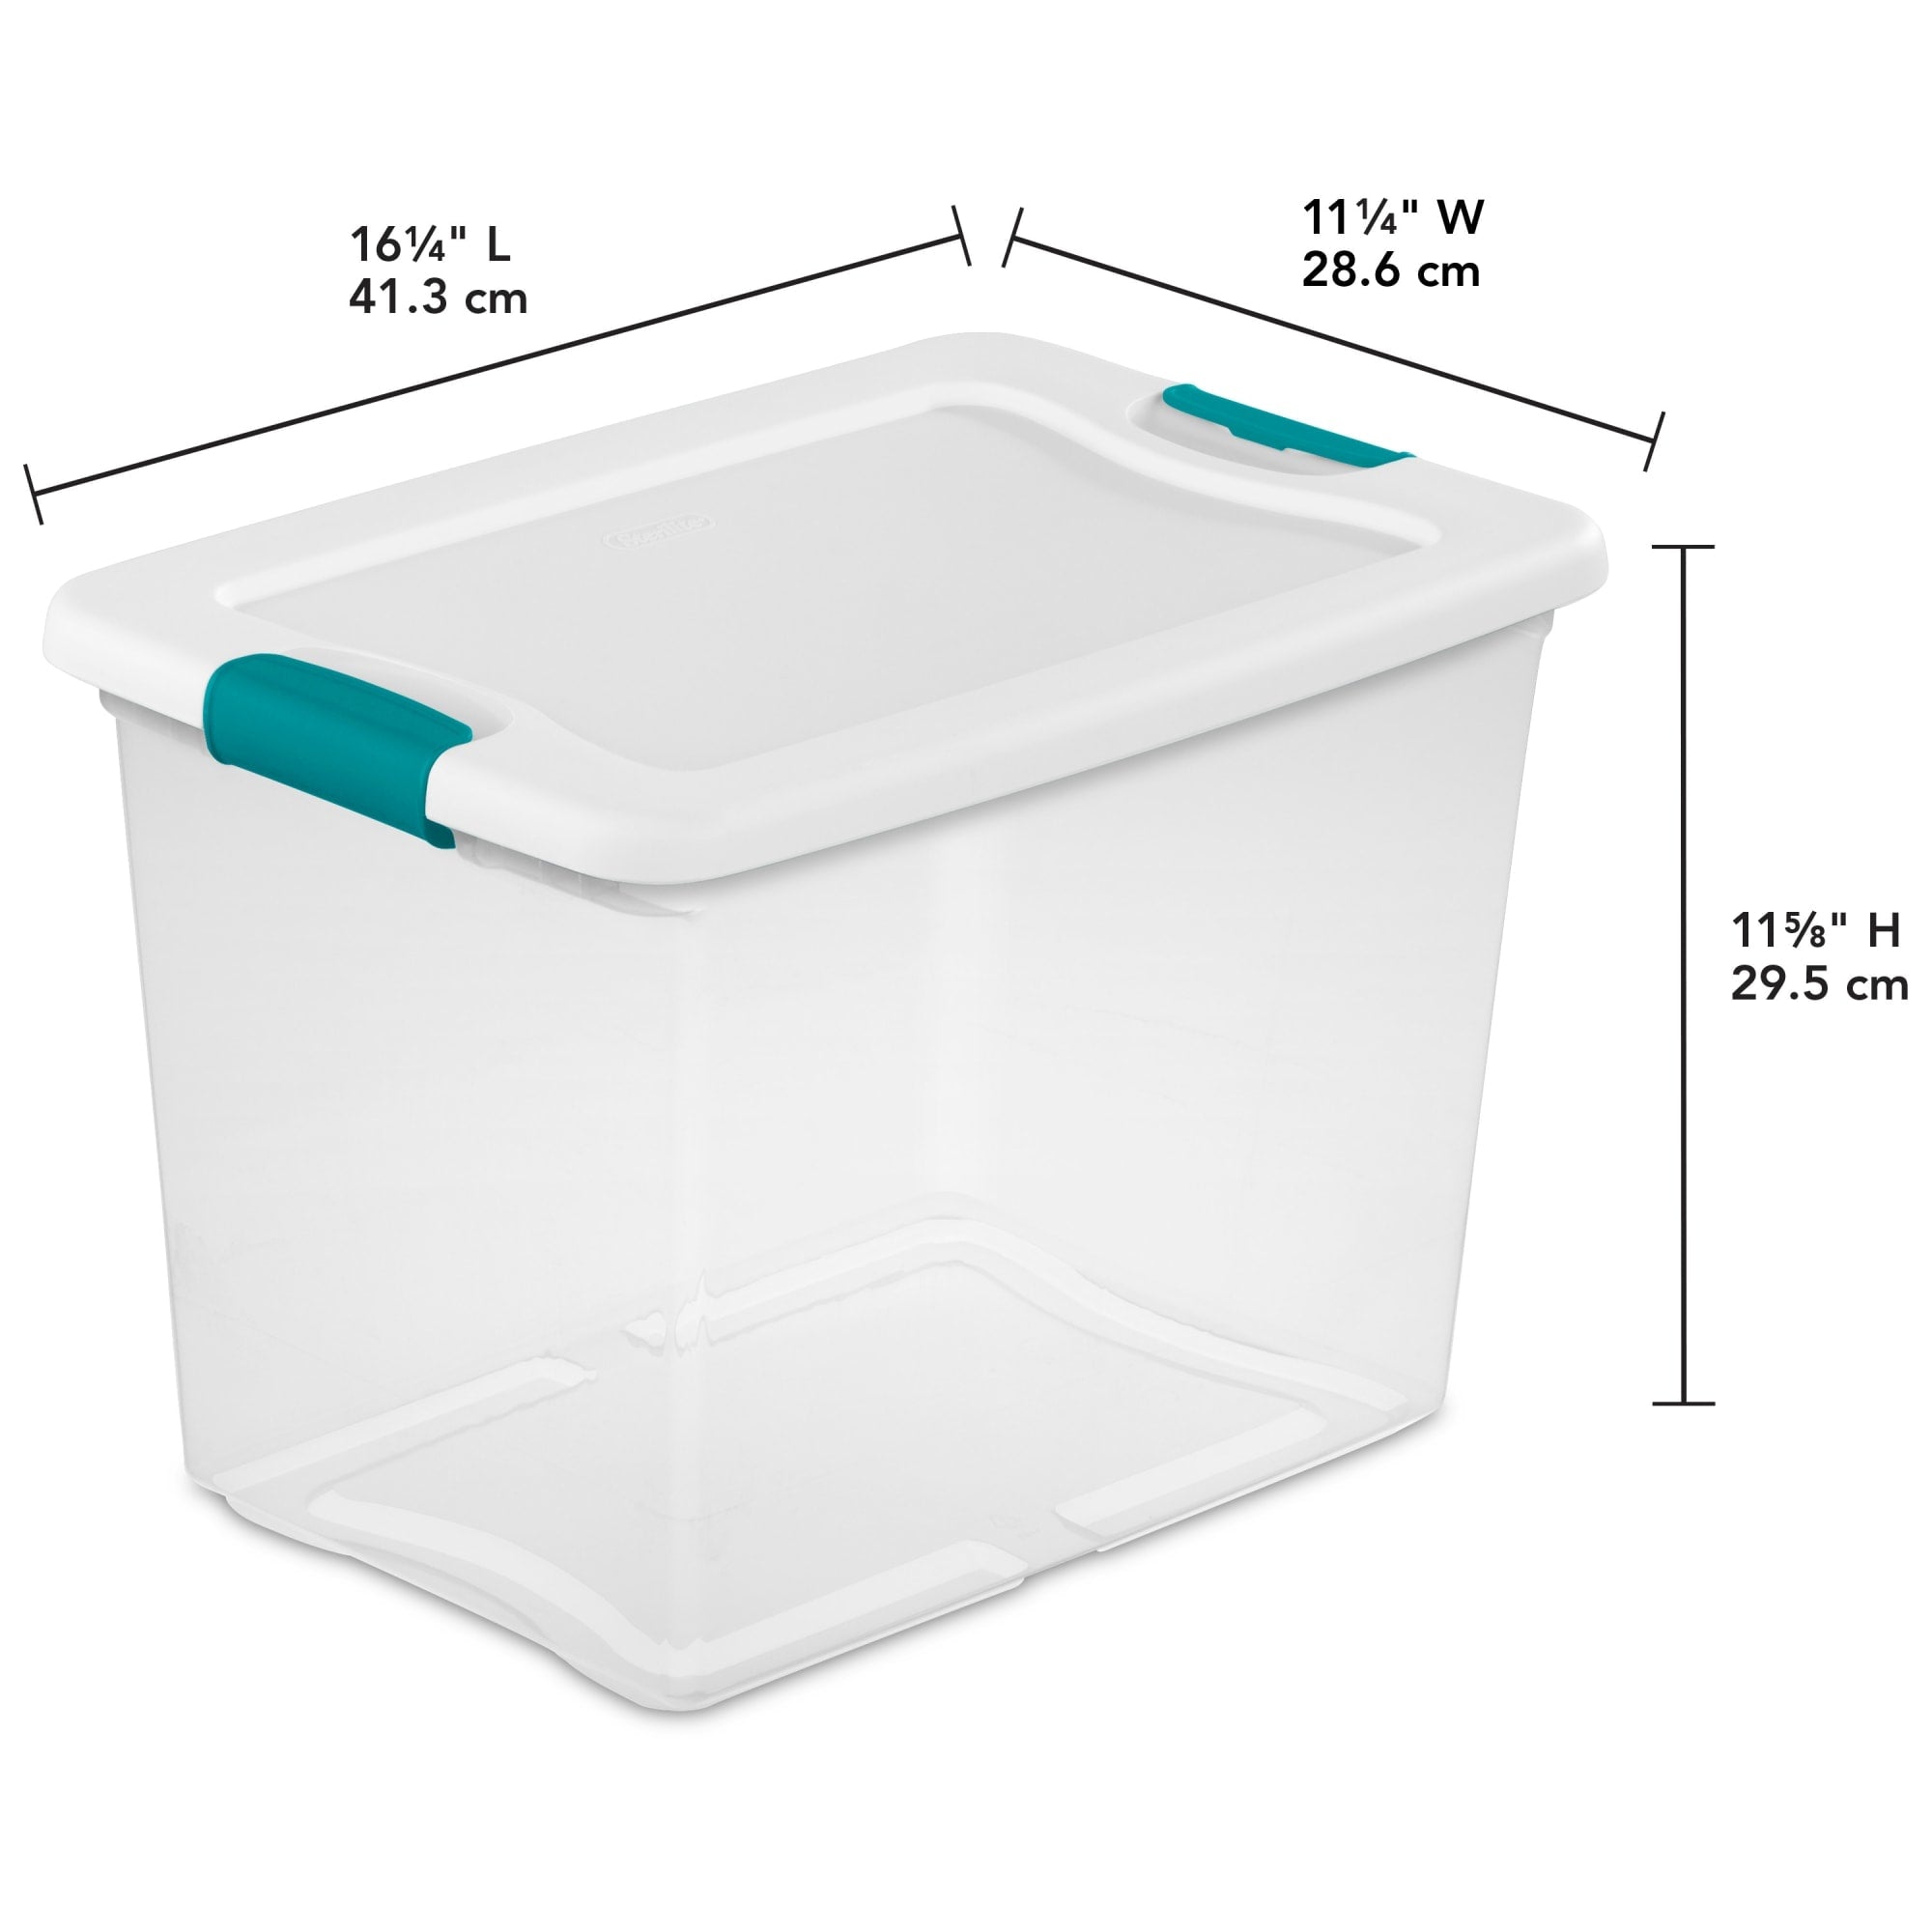 Sterilite 25 Quart / 24 Liter Latching Box $10.00 EACH, CASE PACK OF 6